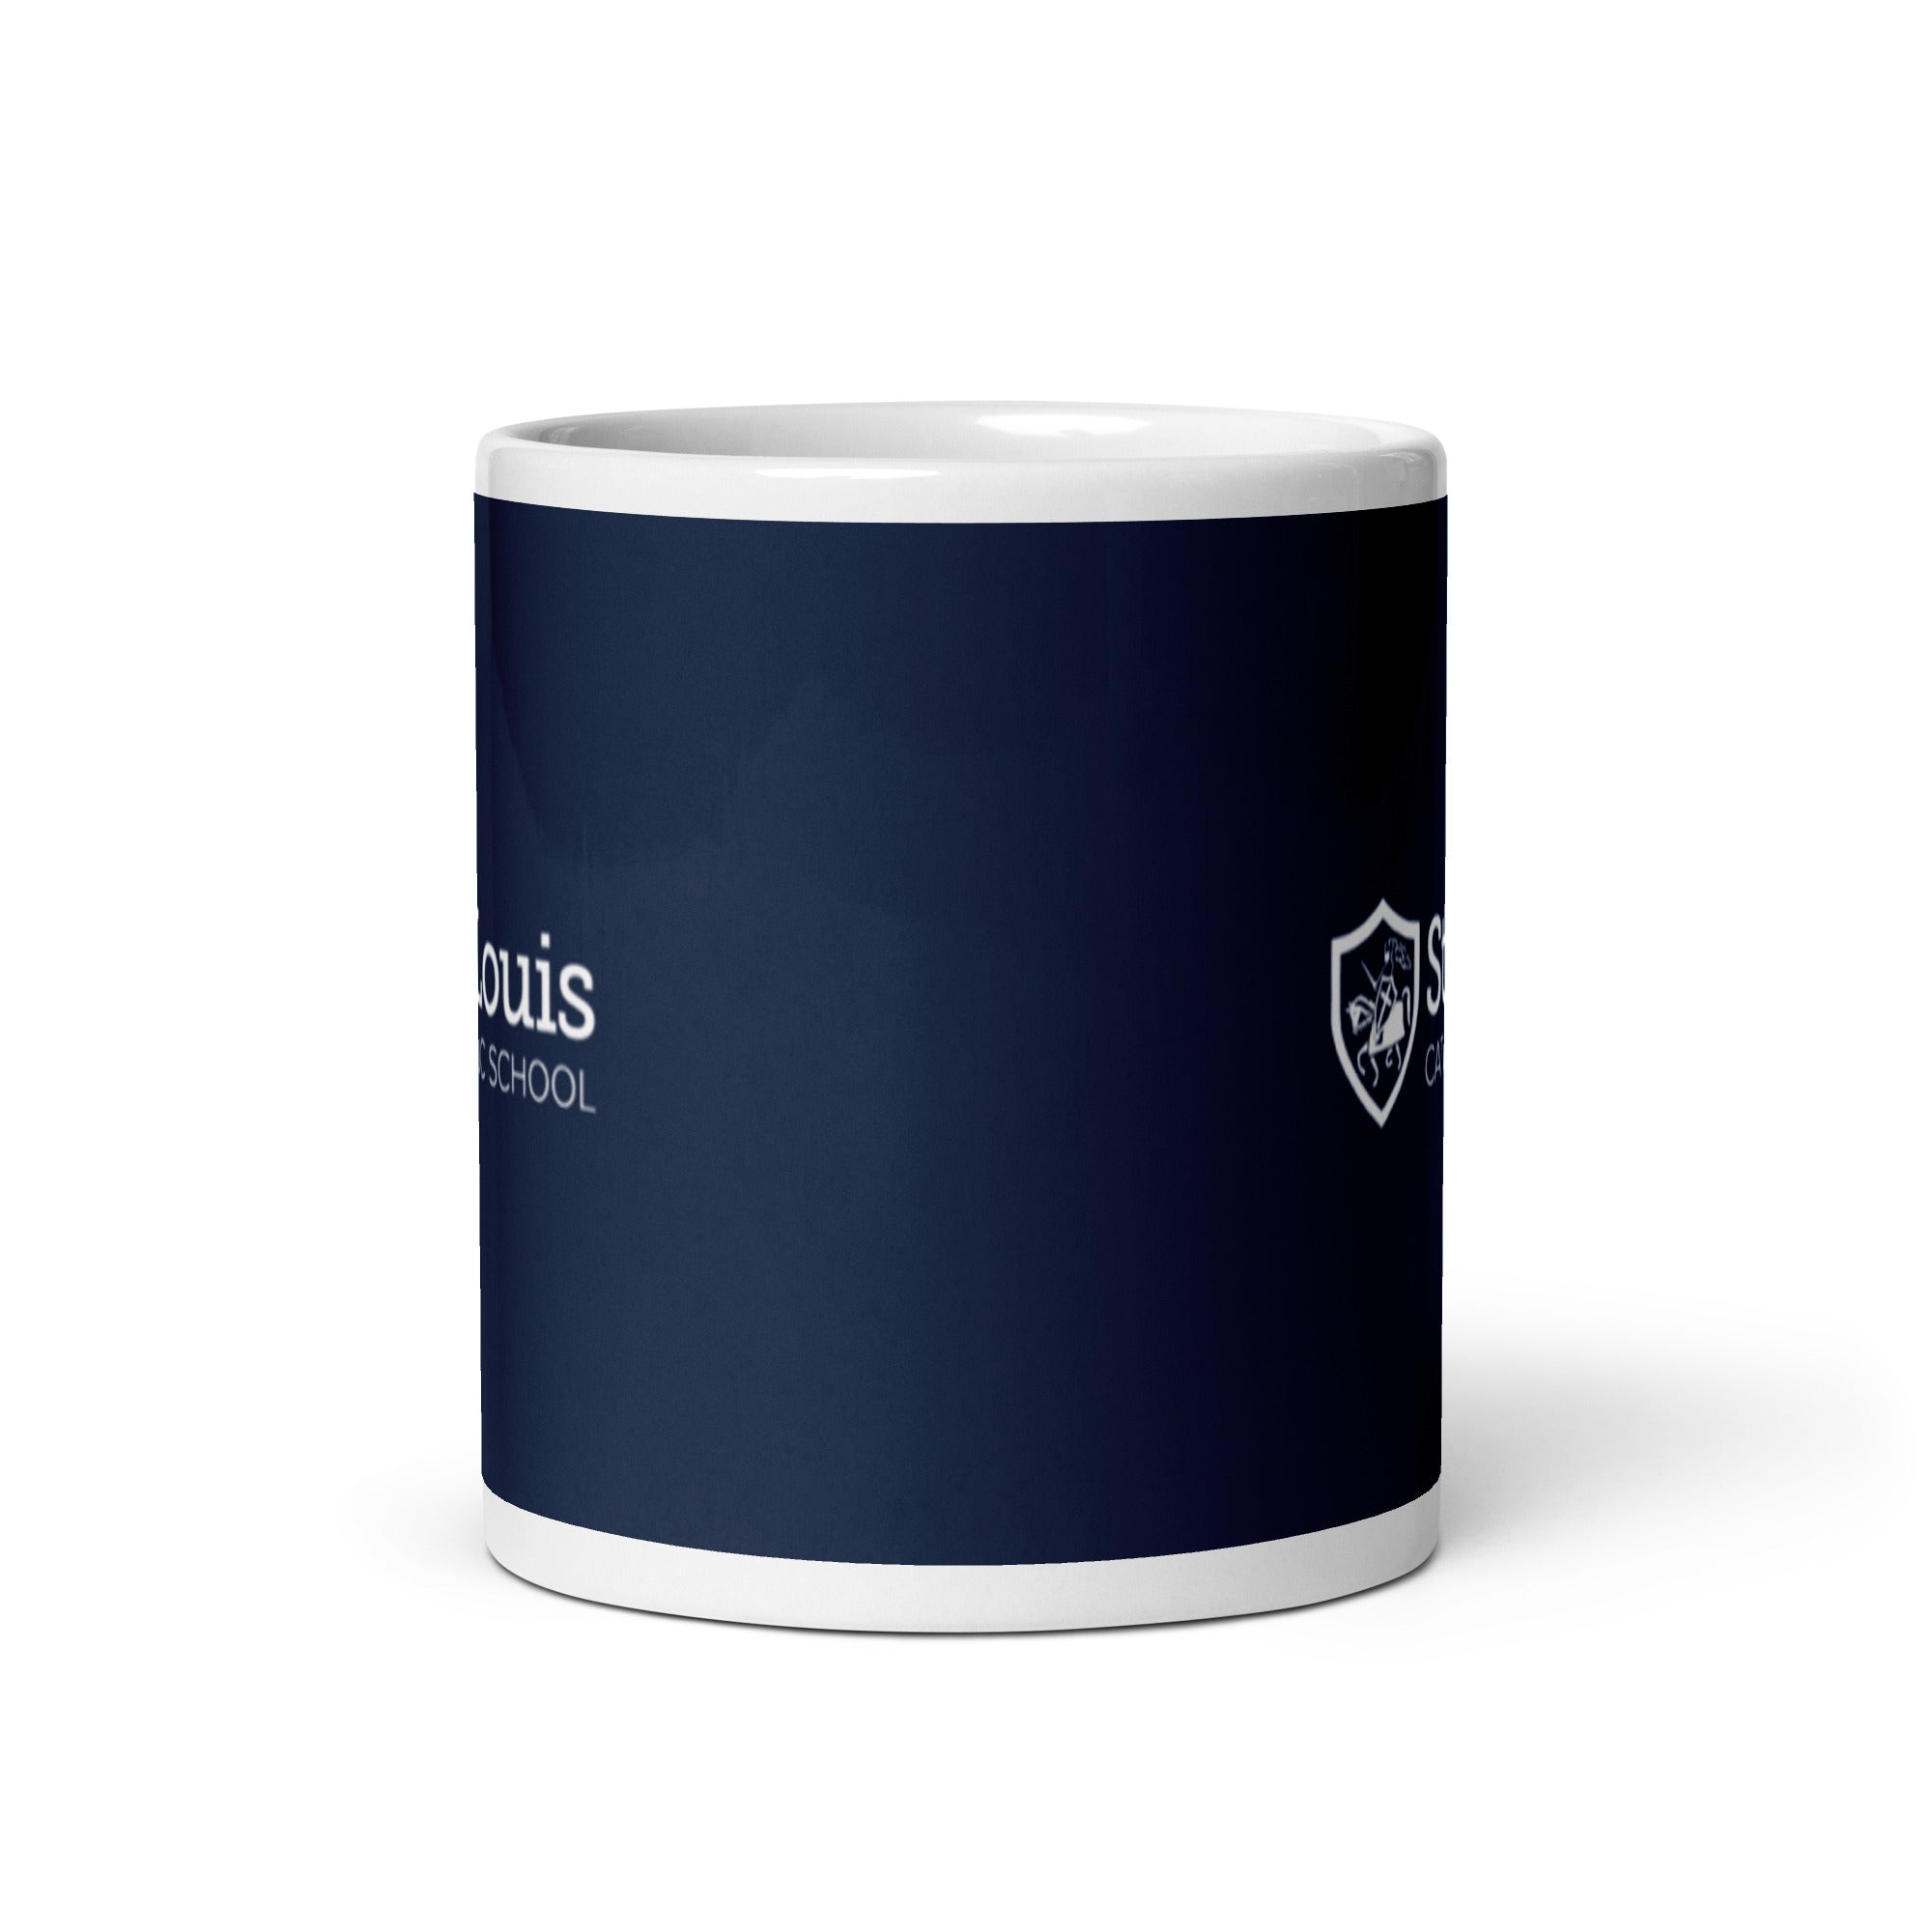 SLCS White glossy mug